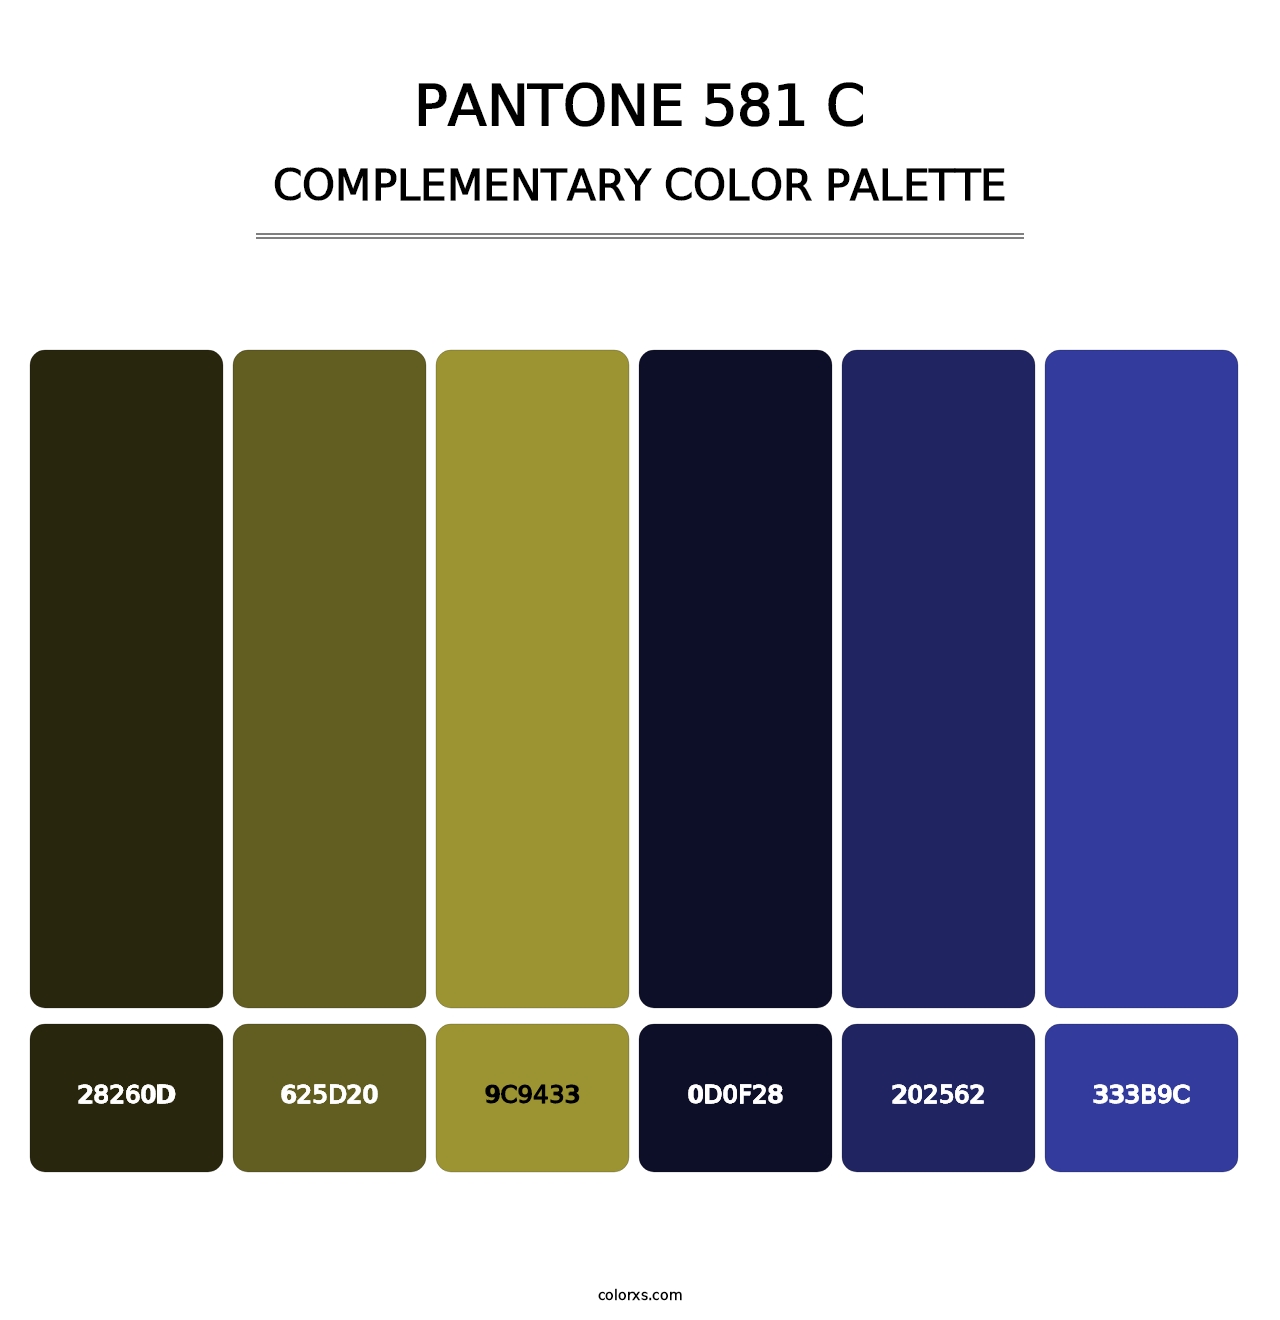 PANTONE 581 C - Complementary Color Palette